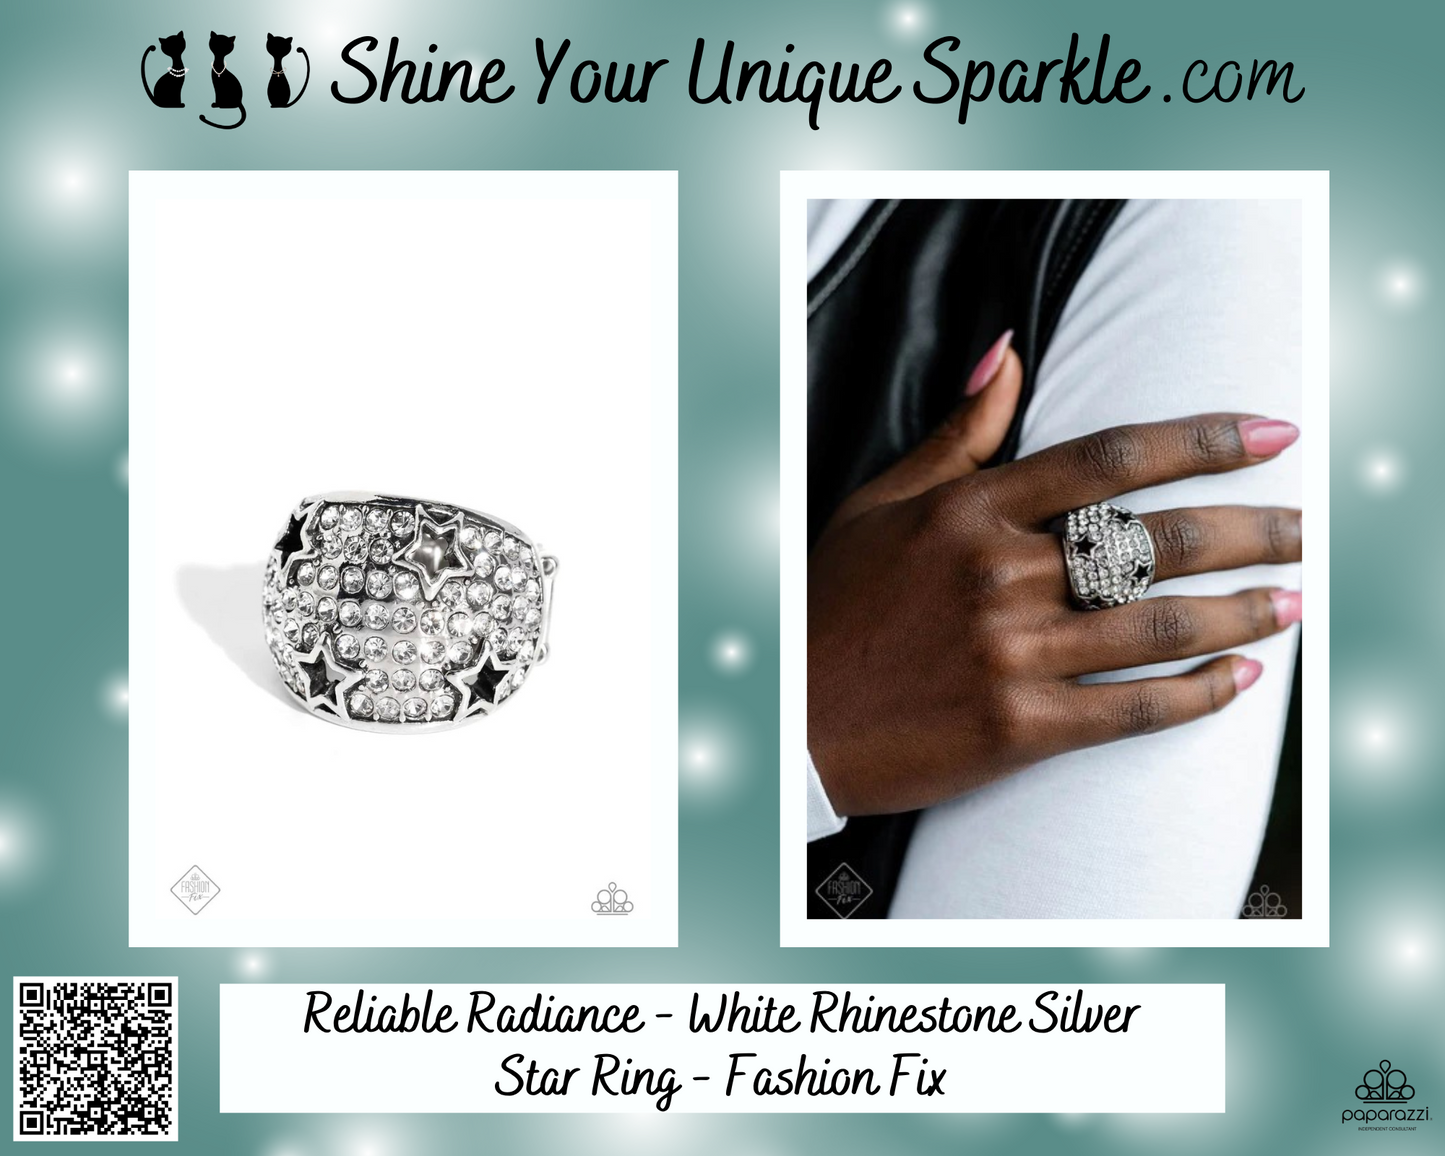 Reliable Radiance - White Rhinestone Silver Star Ring - Fashion Fix